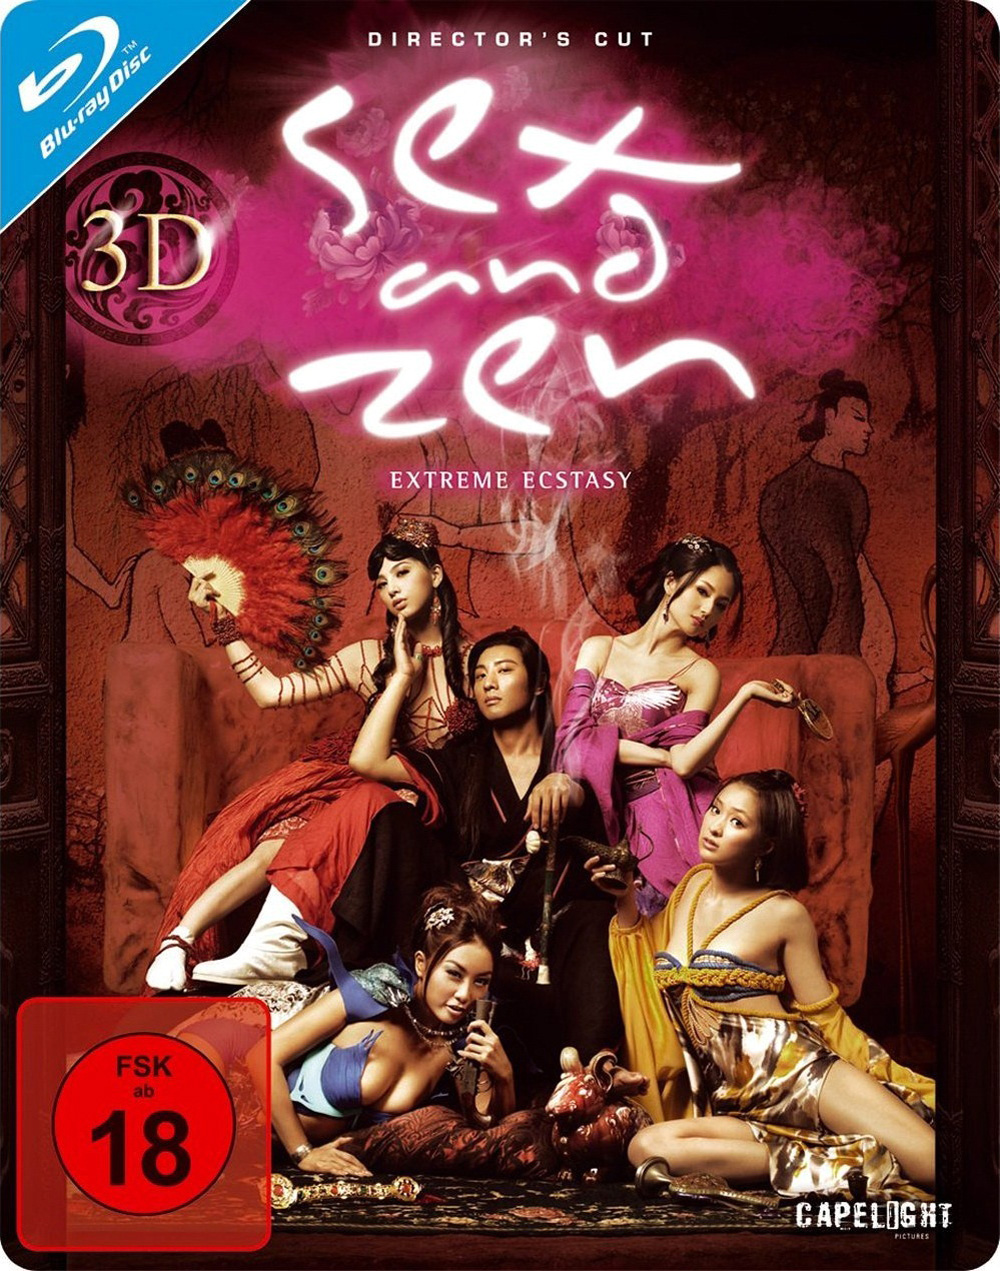 [3D肉蒲团之极乐宝鉴].Sex.and.Zen.Extreme.Ecstasy.2011.DC.3D&2D.BluRay.1080p.AVC.DTS-HD.MA.5.1-Ex-3DBlurayisoTeam    39.65G-6.jpg